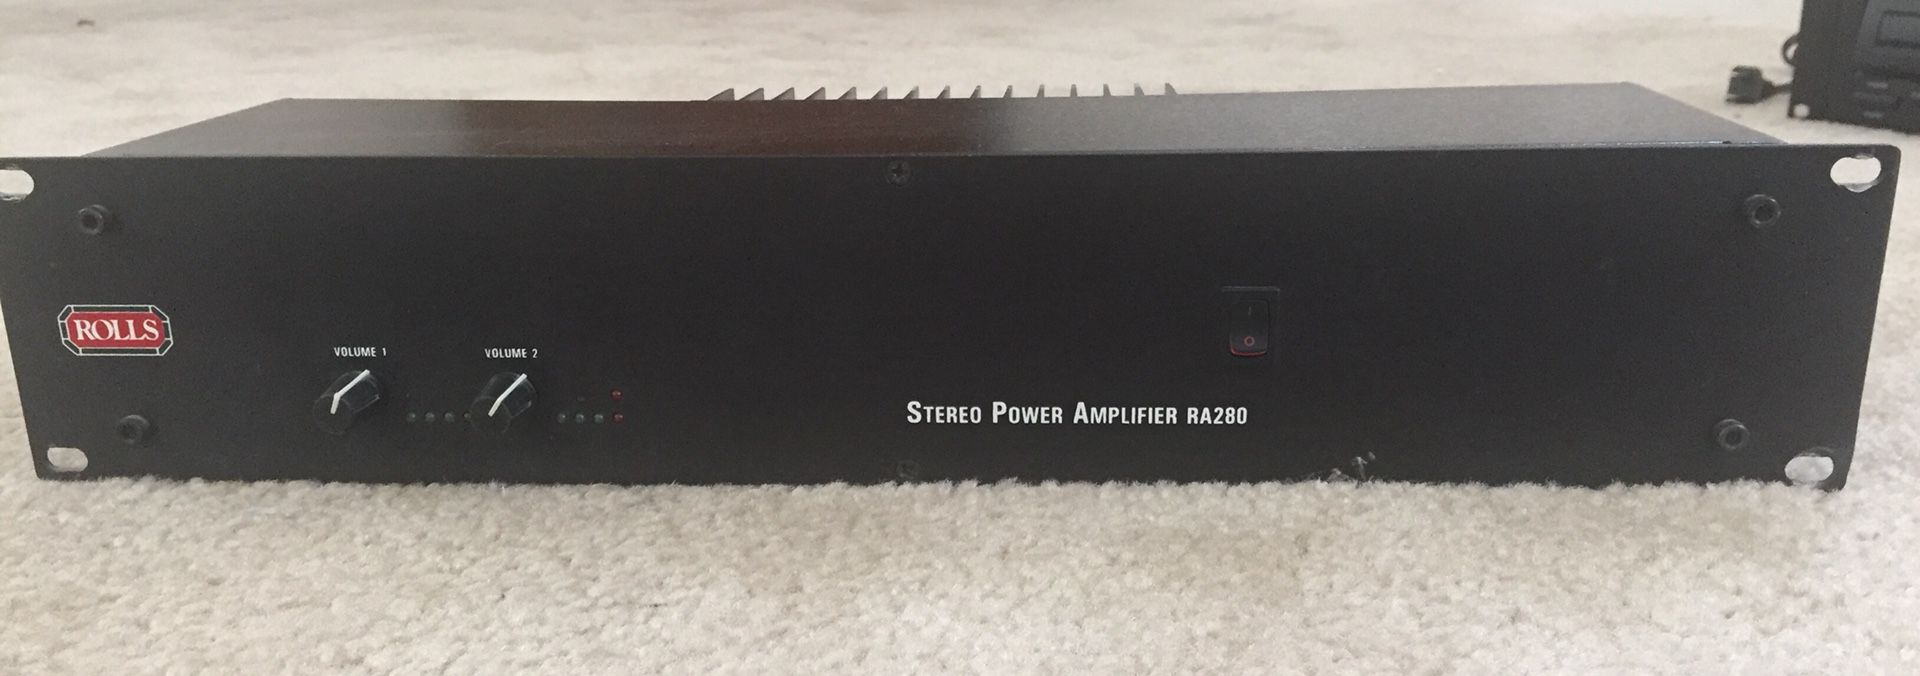 Rolls Stereo Power Amp RA280